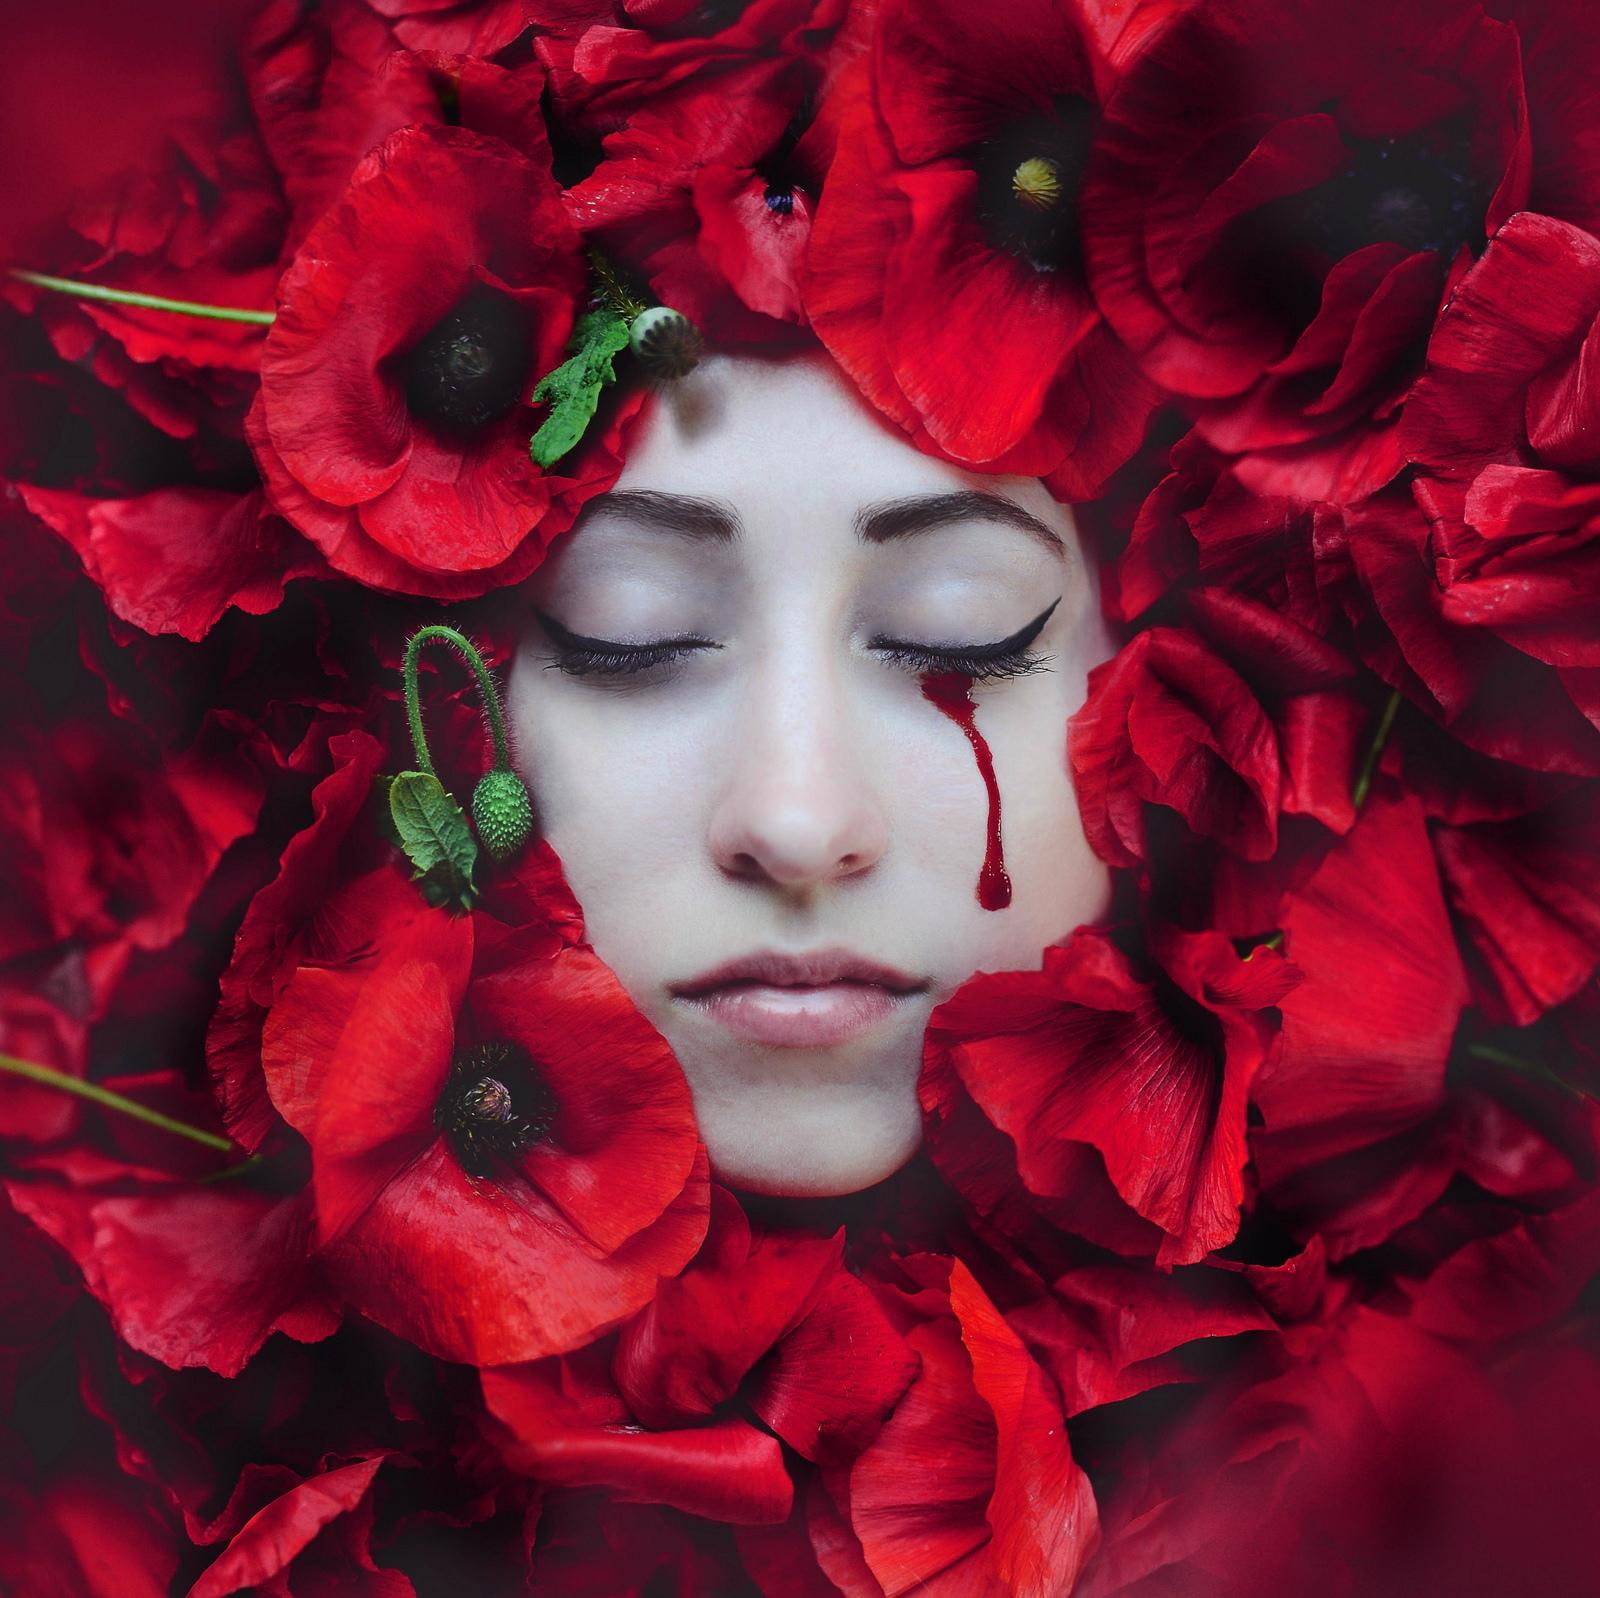 Bleeding Rose, flowers, photography, face, tears, blood